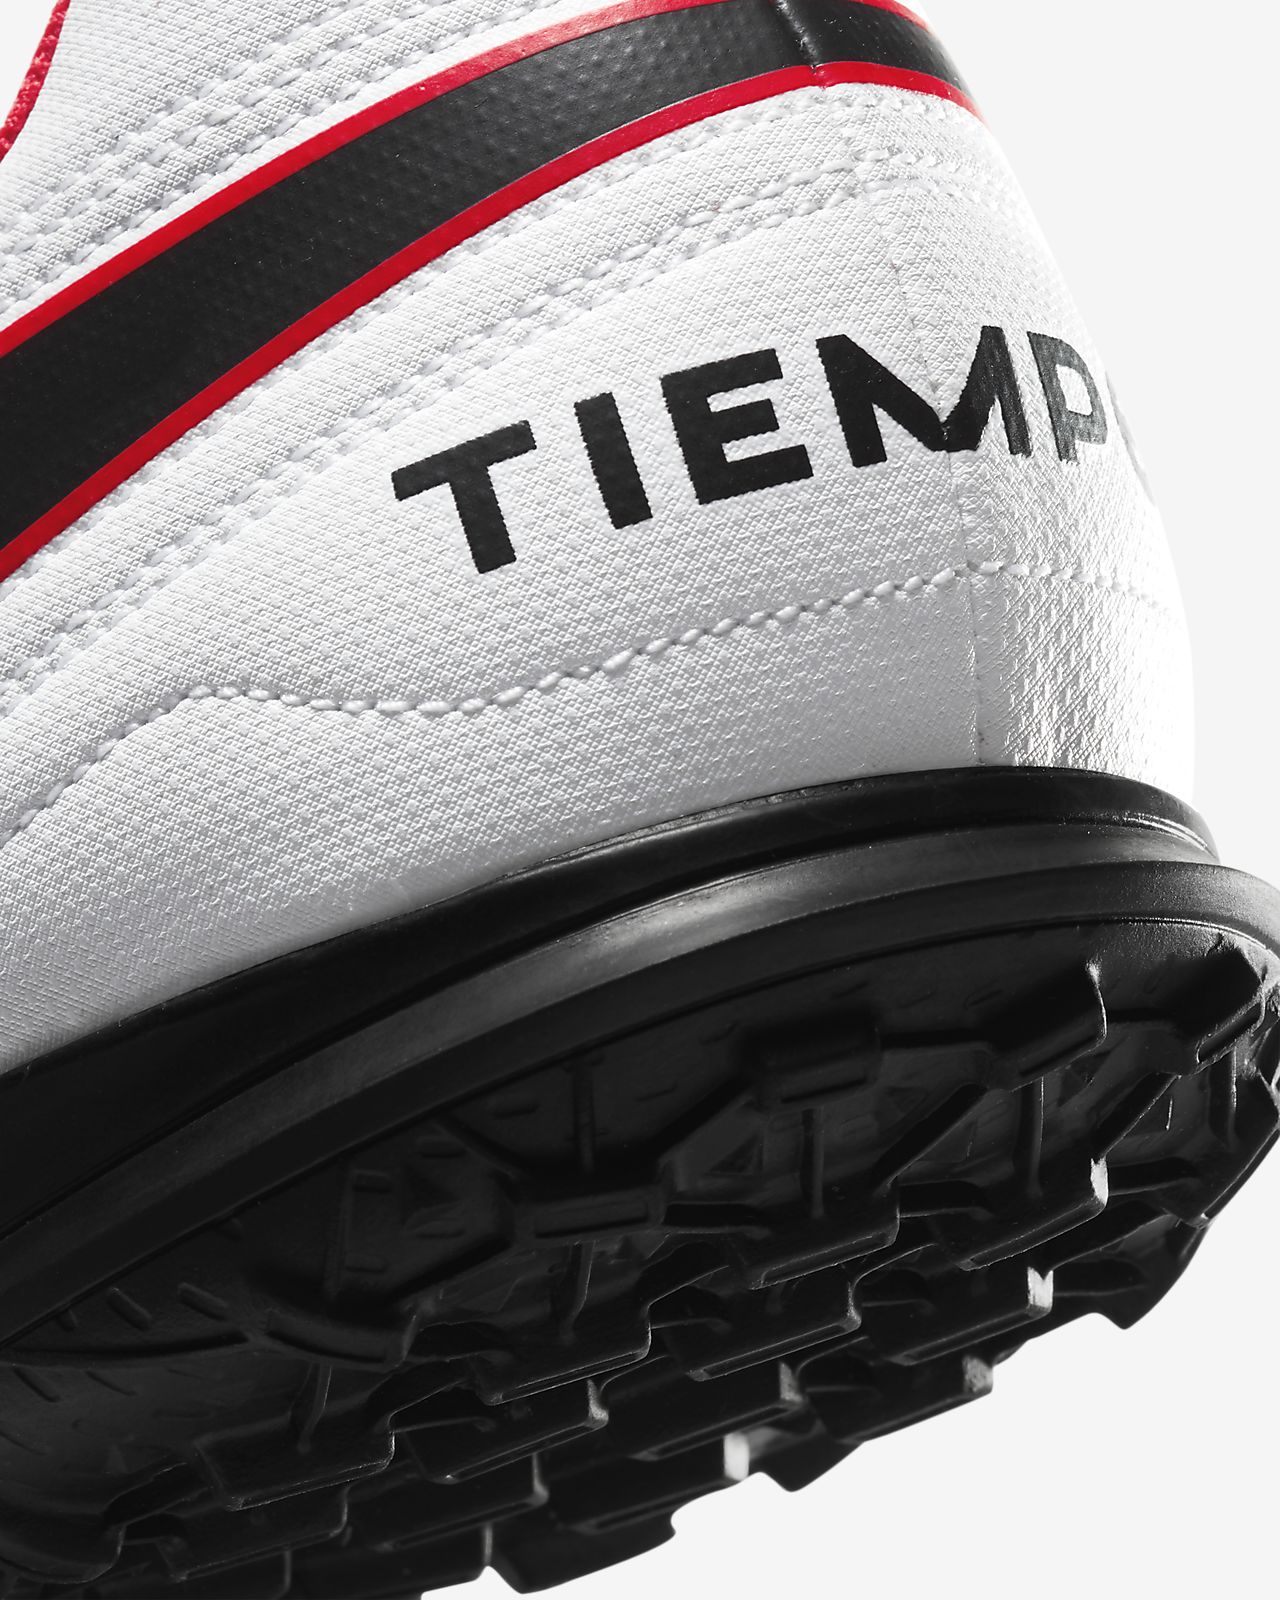 Nike Tiempo Legend VIII Academy FG Mens Soccer Cleats